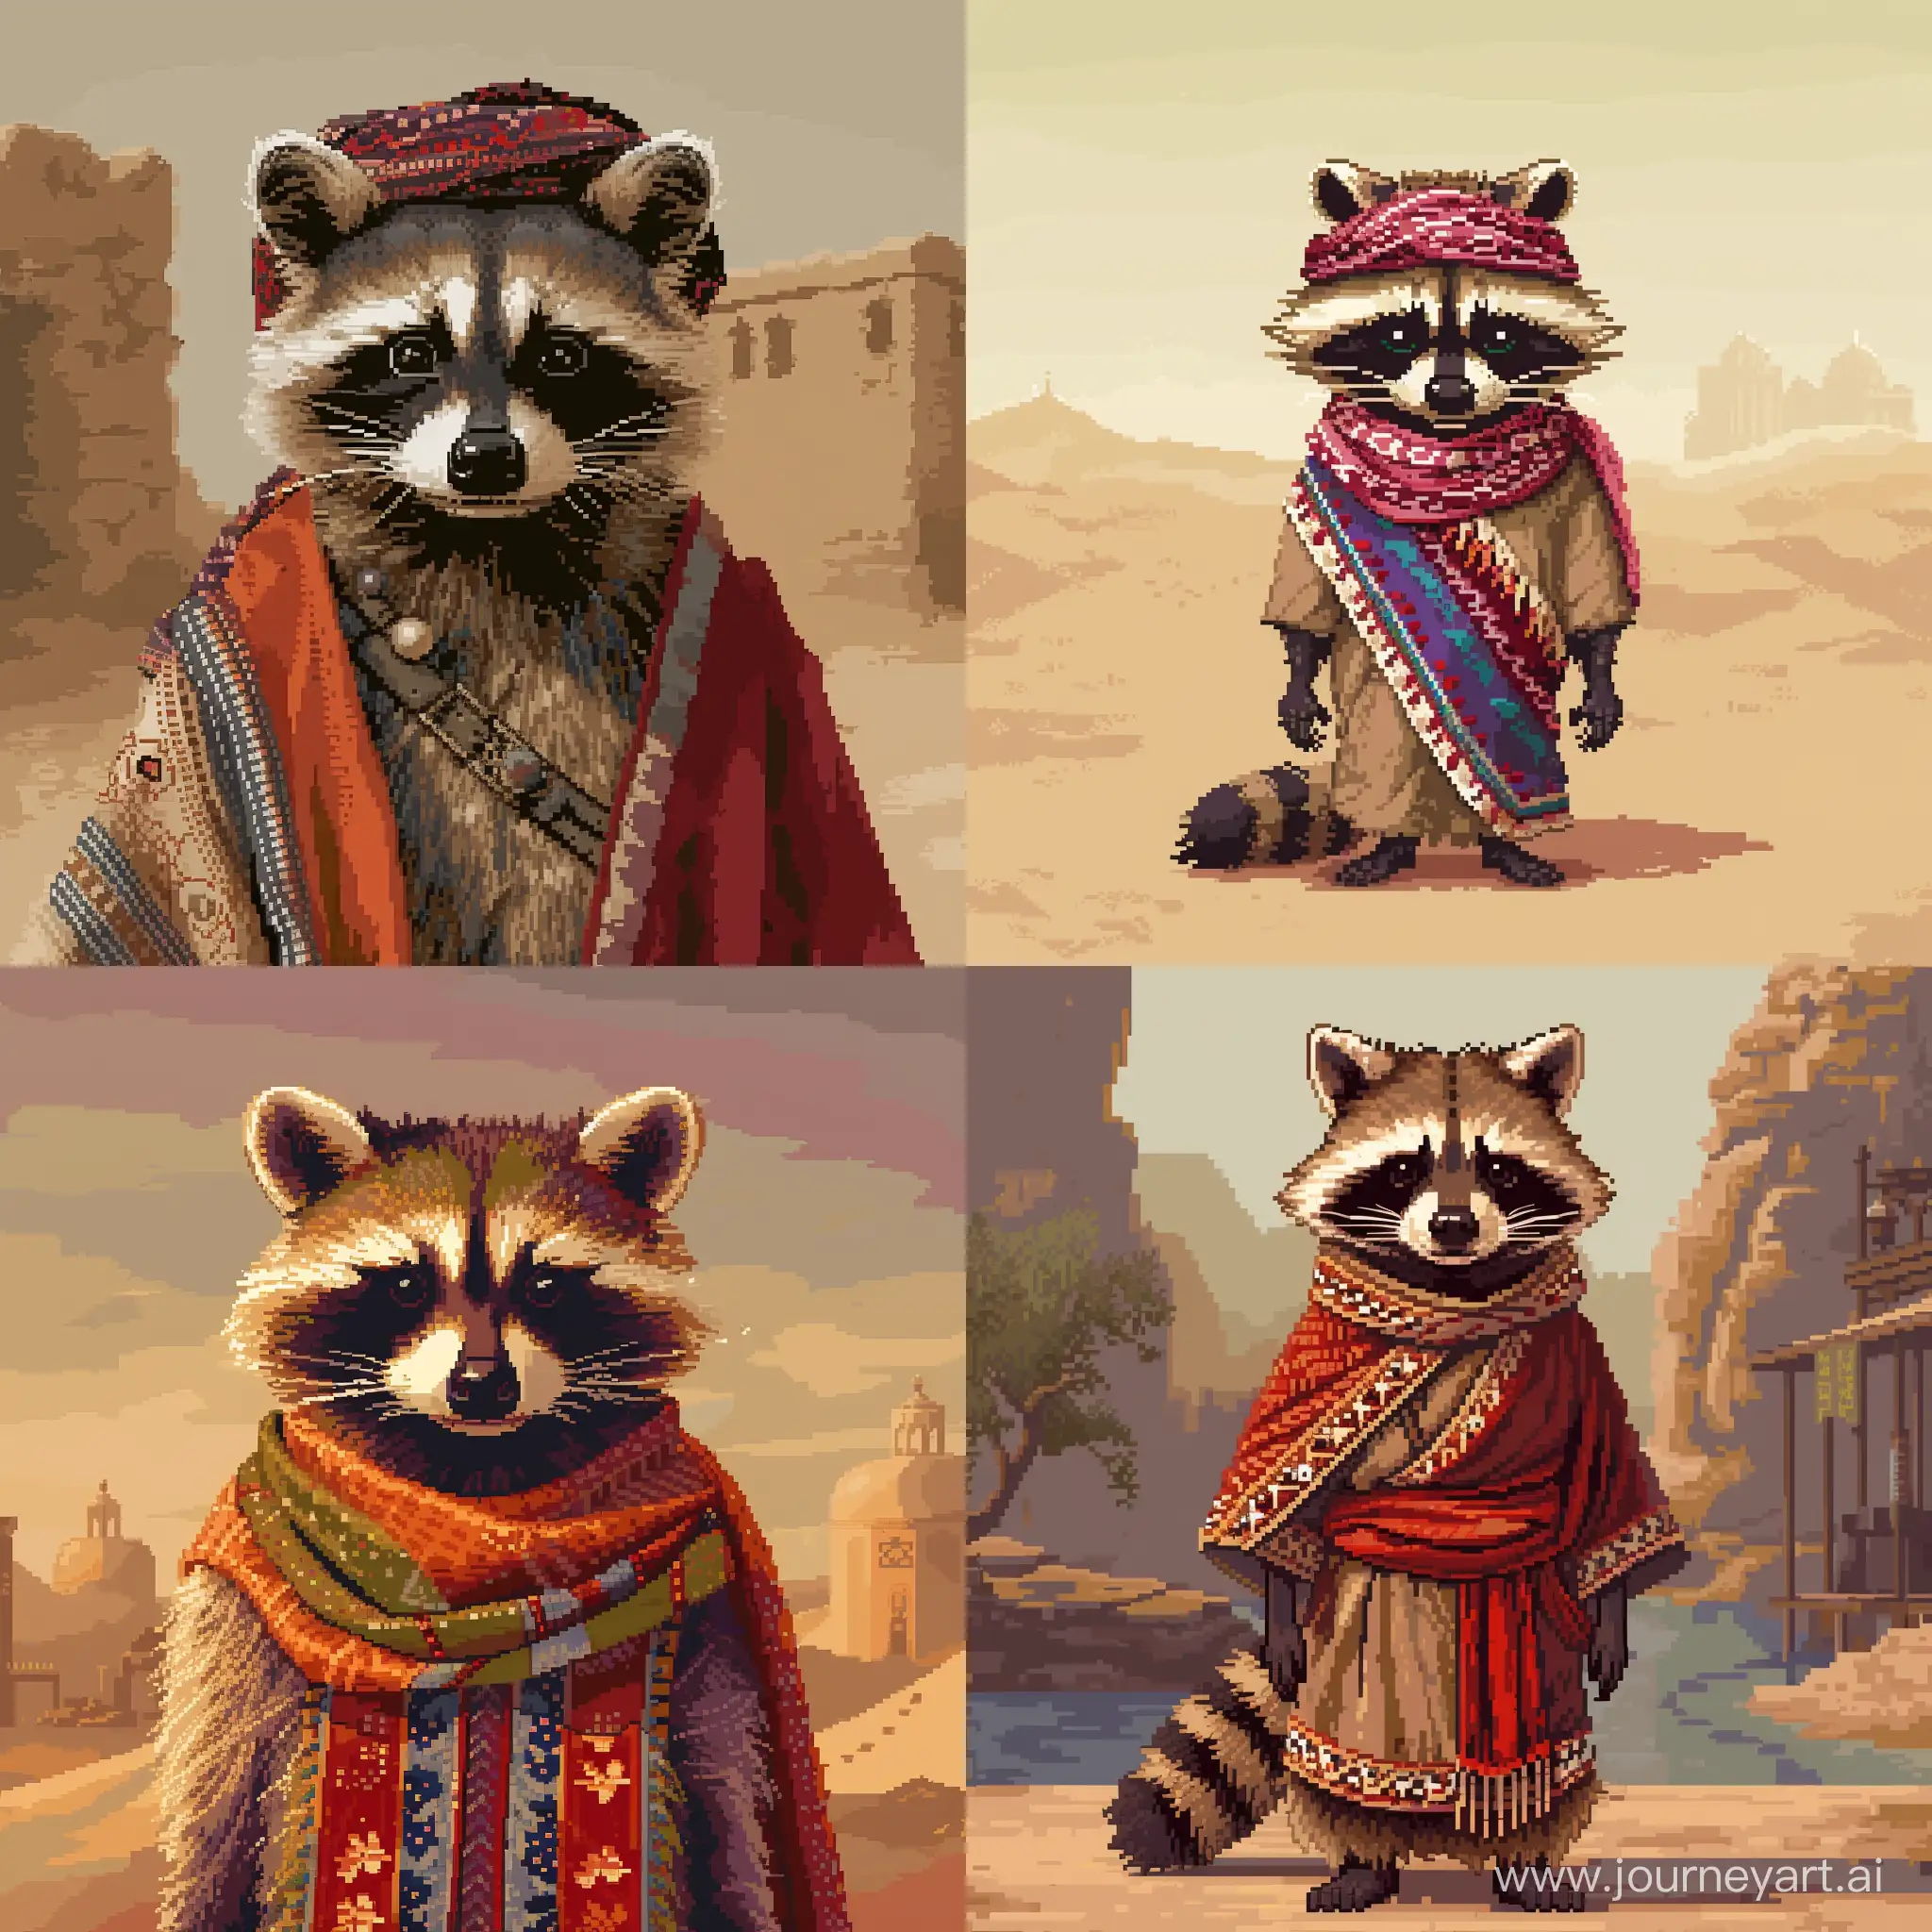 A pixel raccoon in Arab clothes